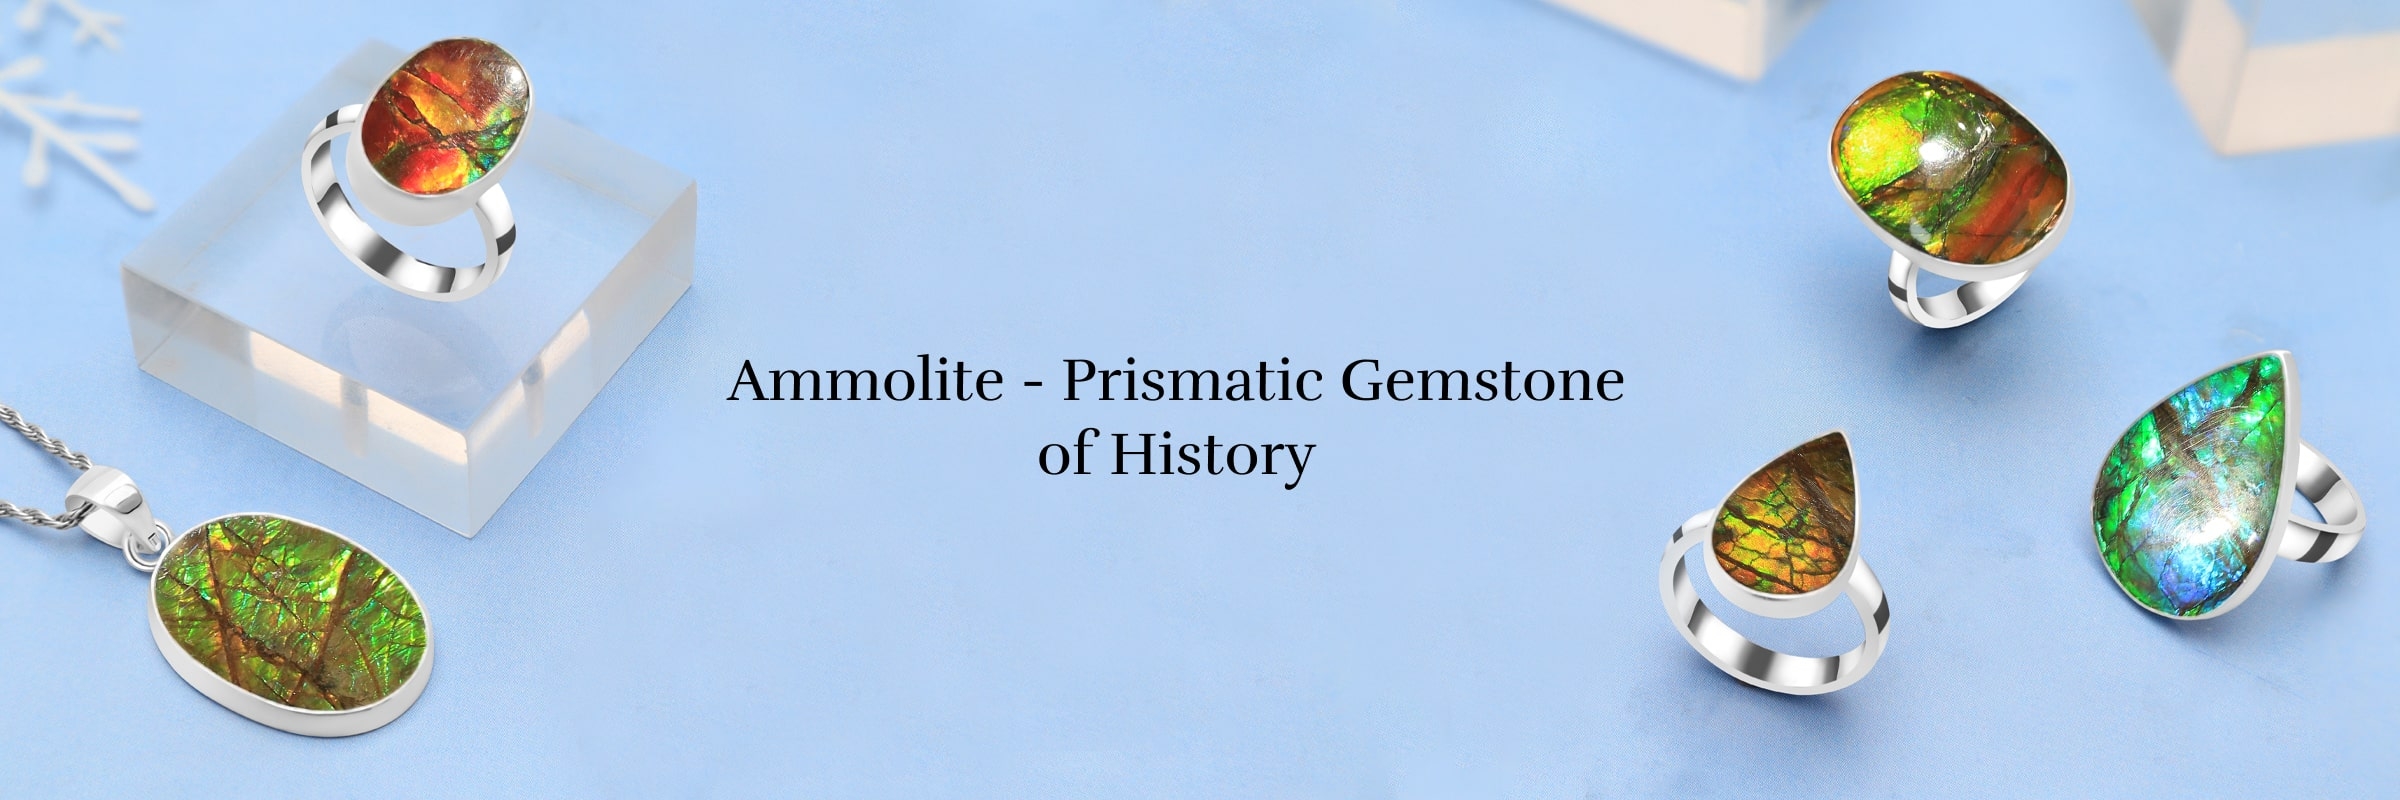 What is Ammolite